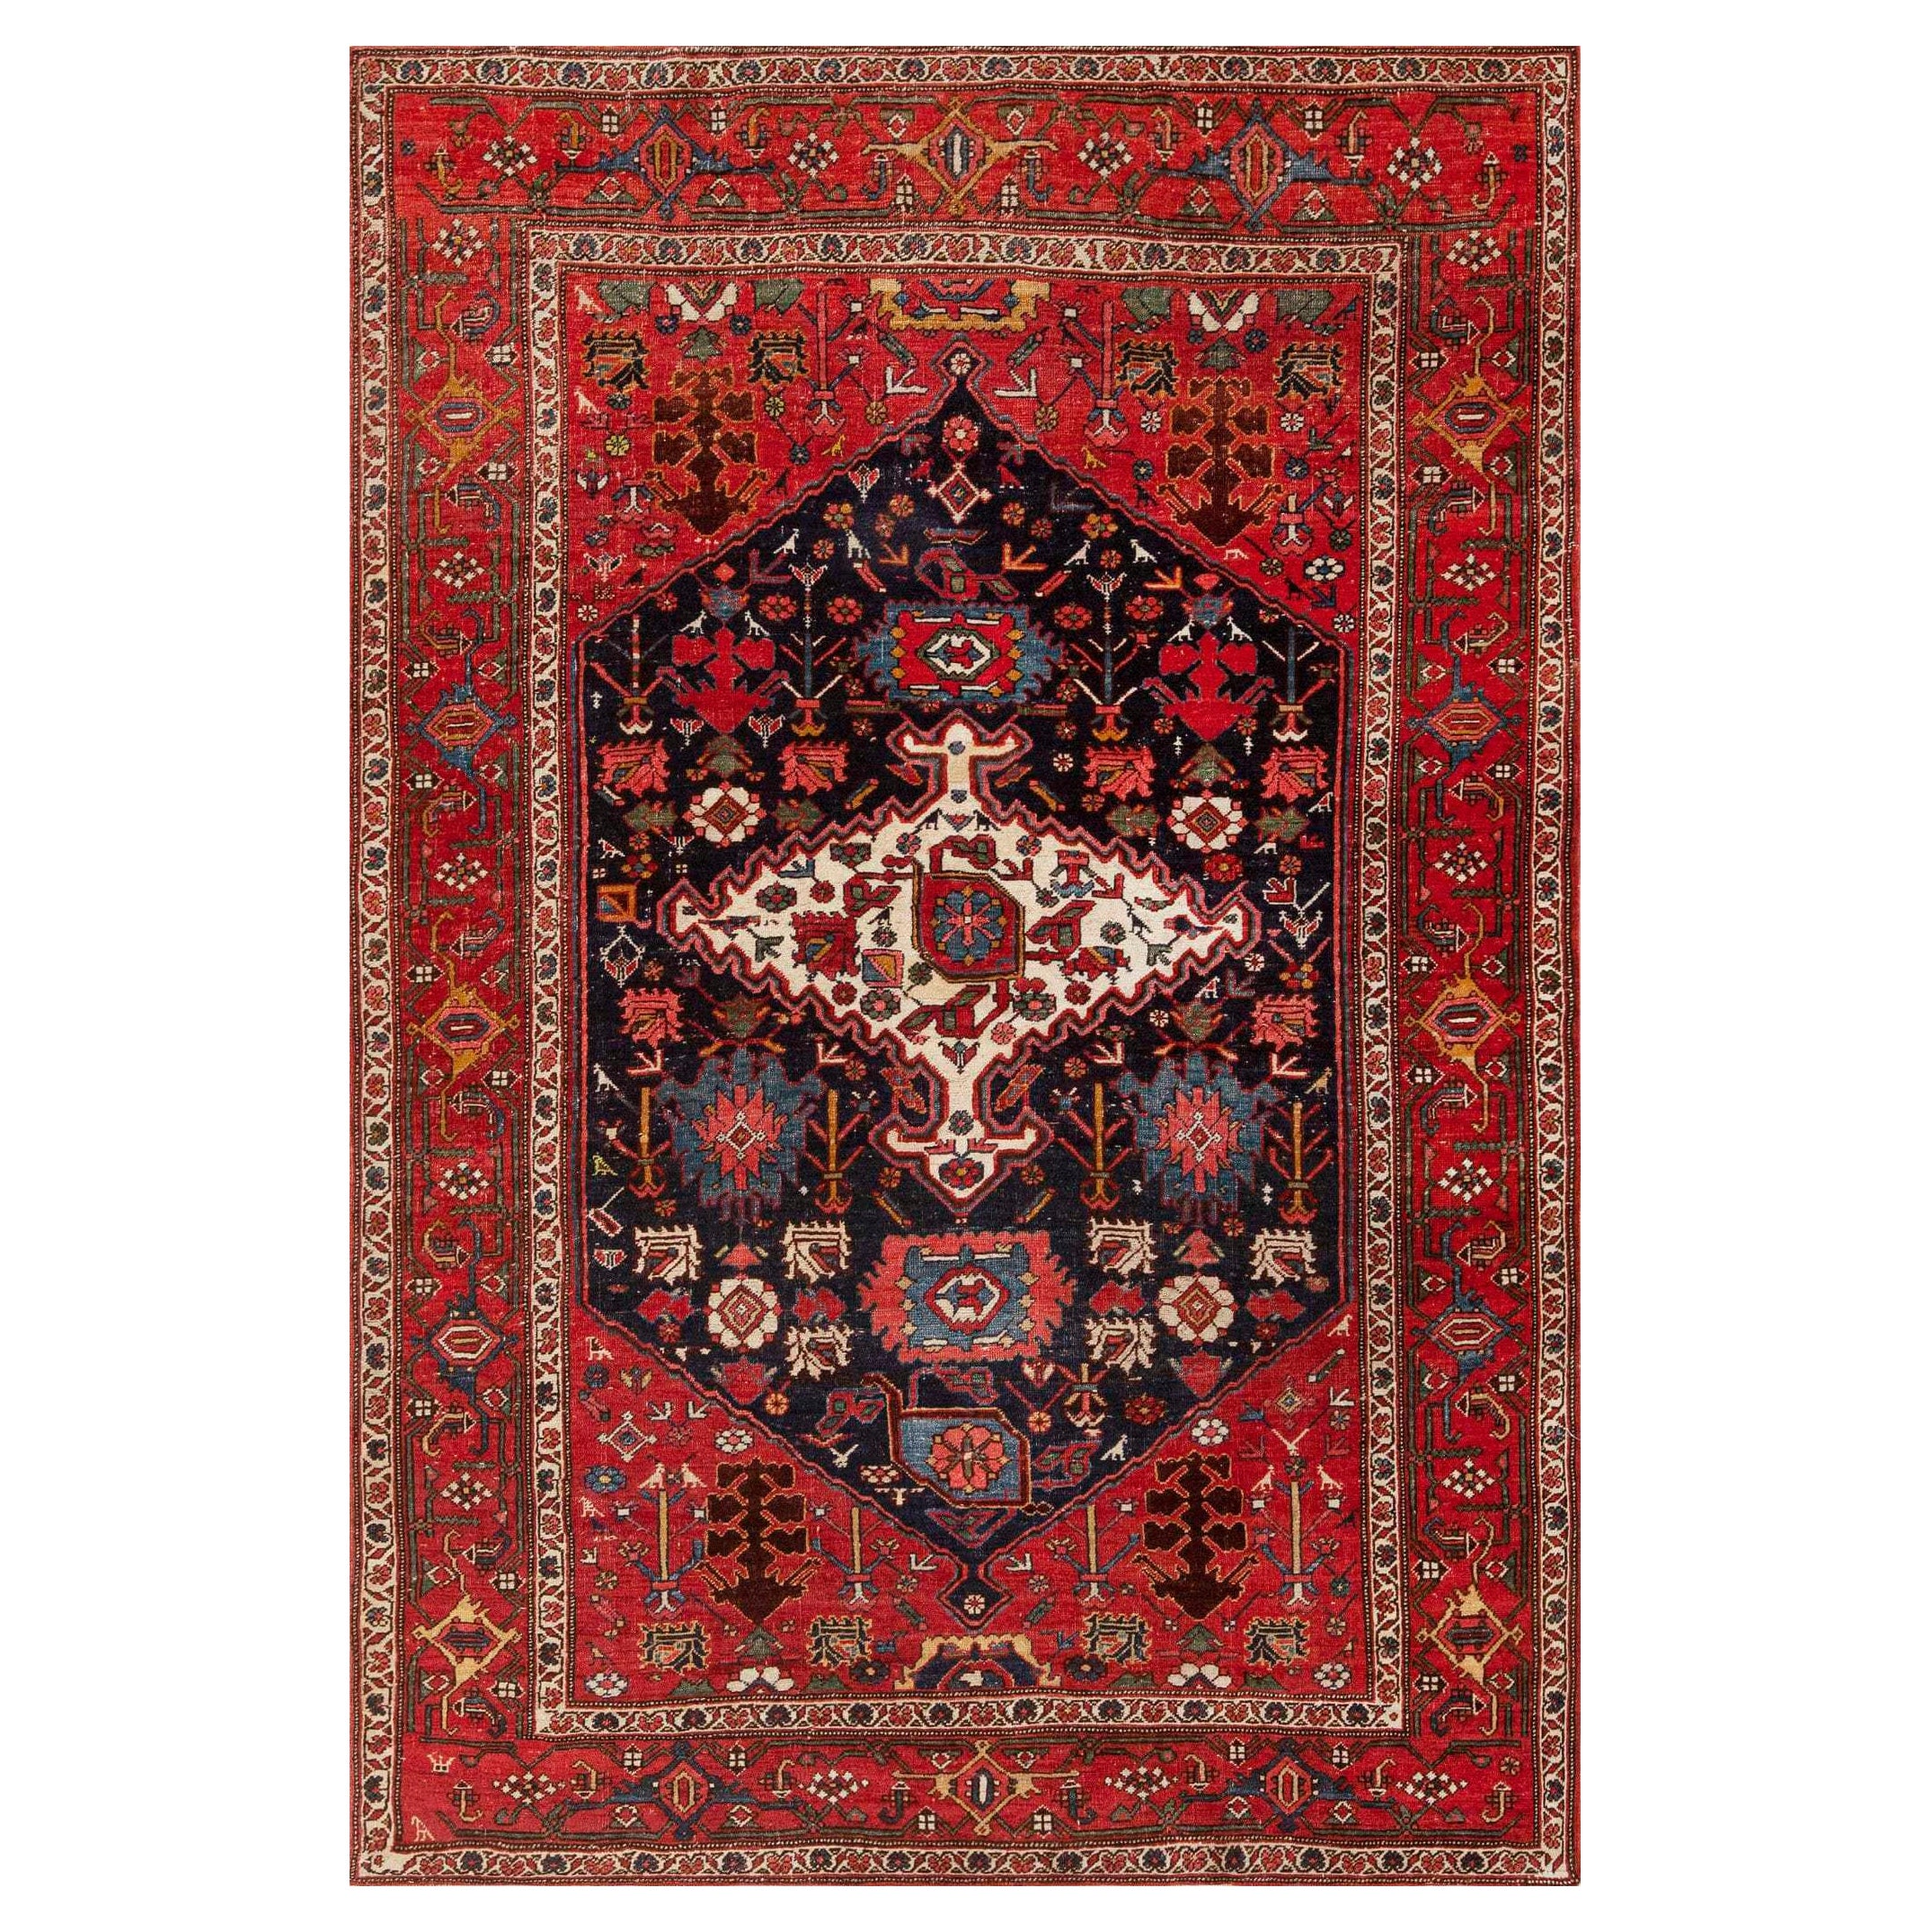 Stunning Small Antique Tribal Harshang Design Persian Bidjar Area Rug 4'6" x 7'